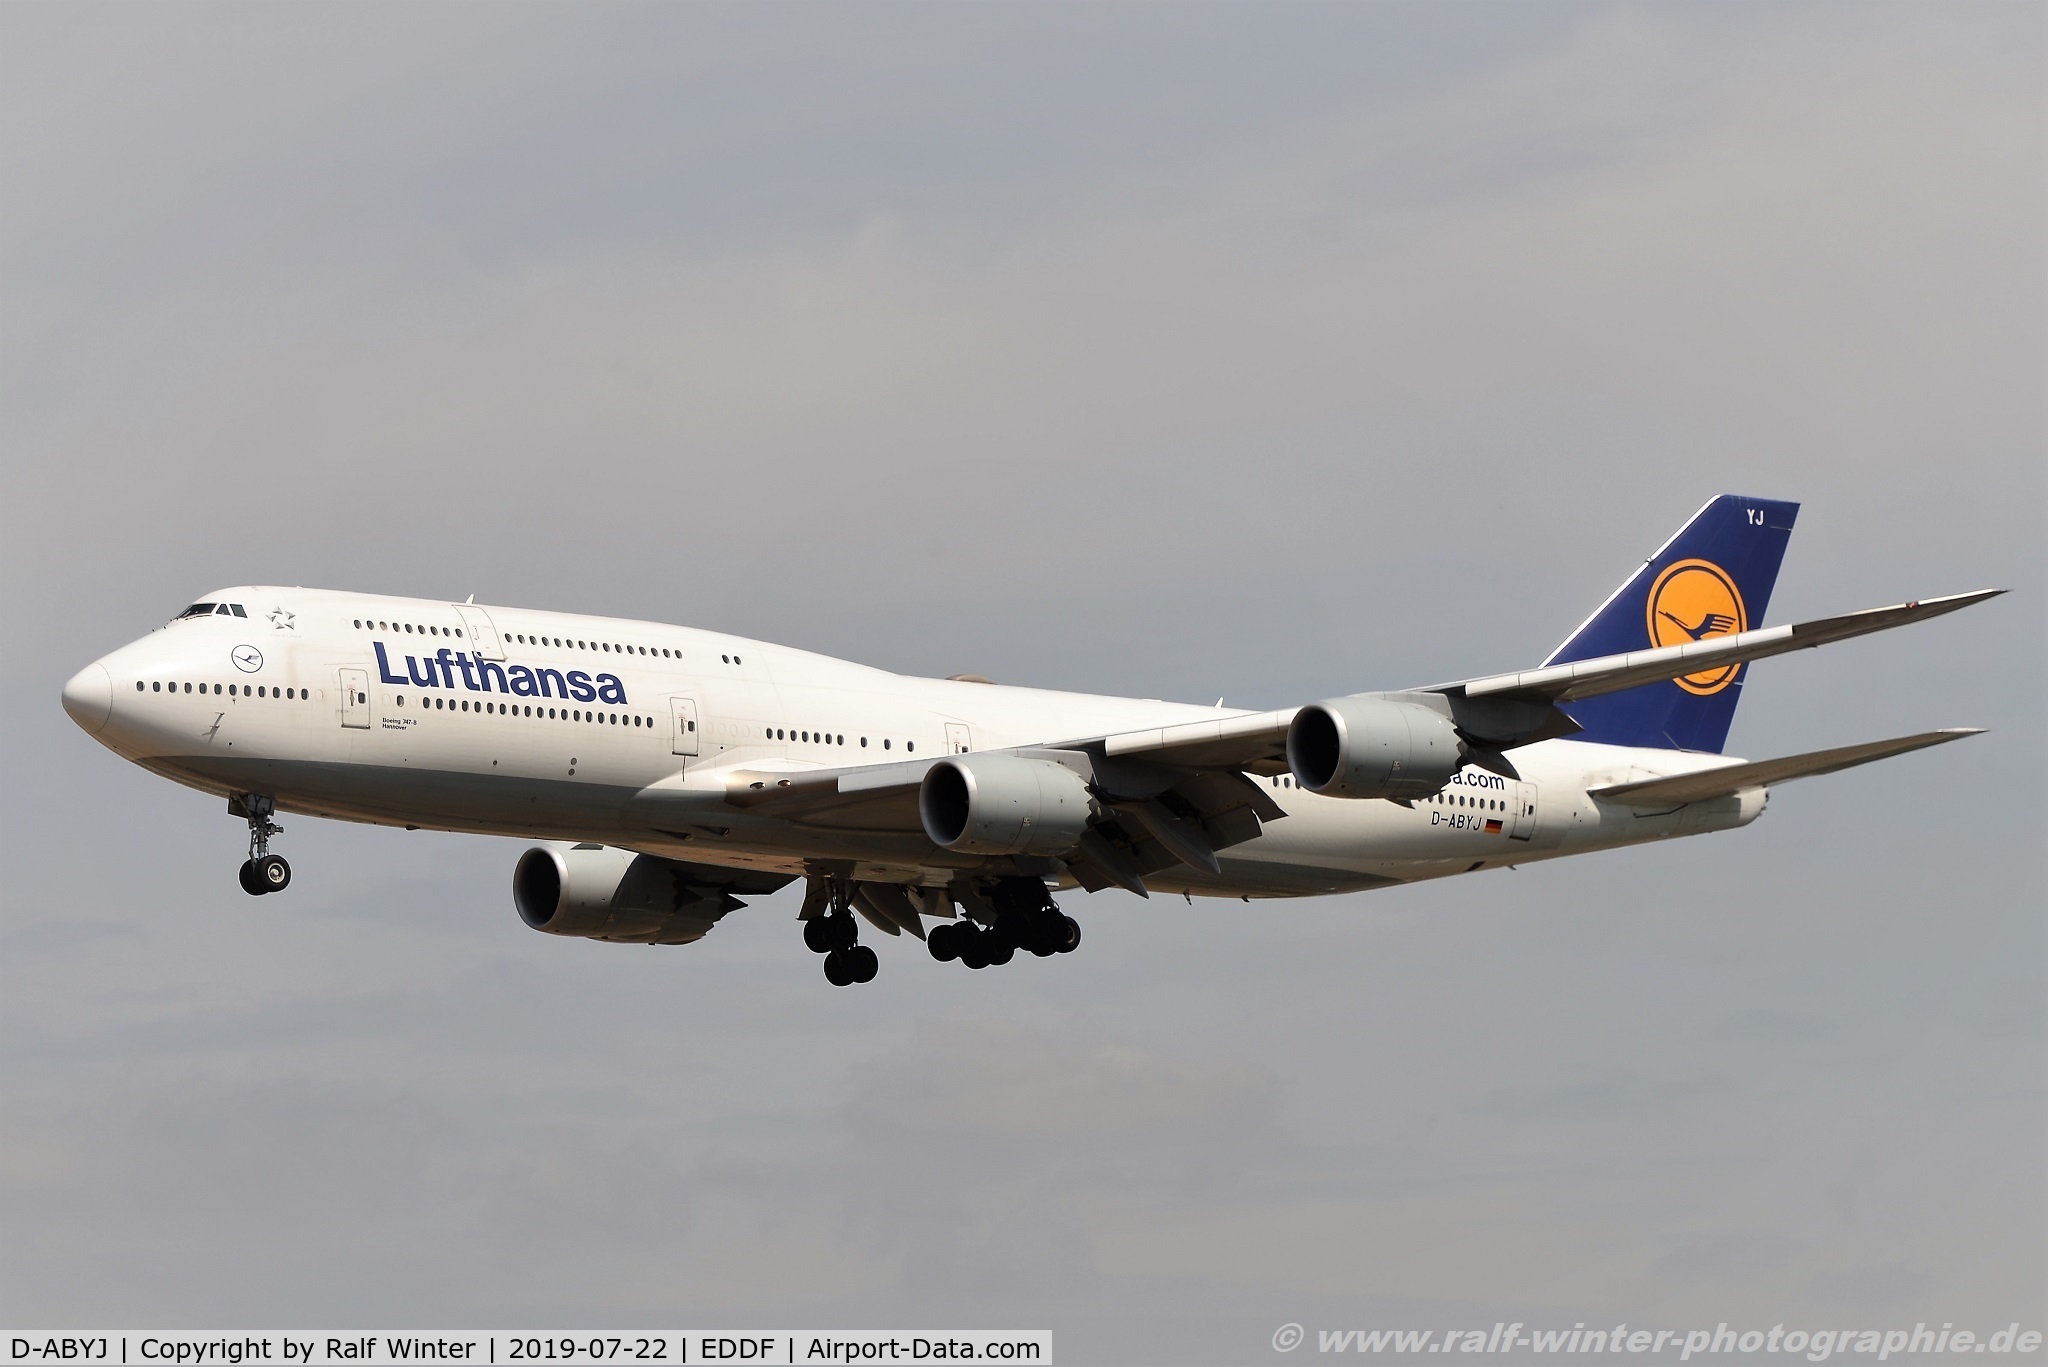 D-ABYJ, 2013 Boeing 747-830 C/N 37834, Boeing 747-830 - LH DLH Lufthansa 'Hannover' - 37834 - D-ABYJ - 22.07.2019 - FRA